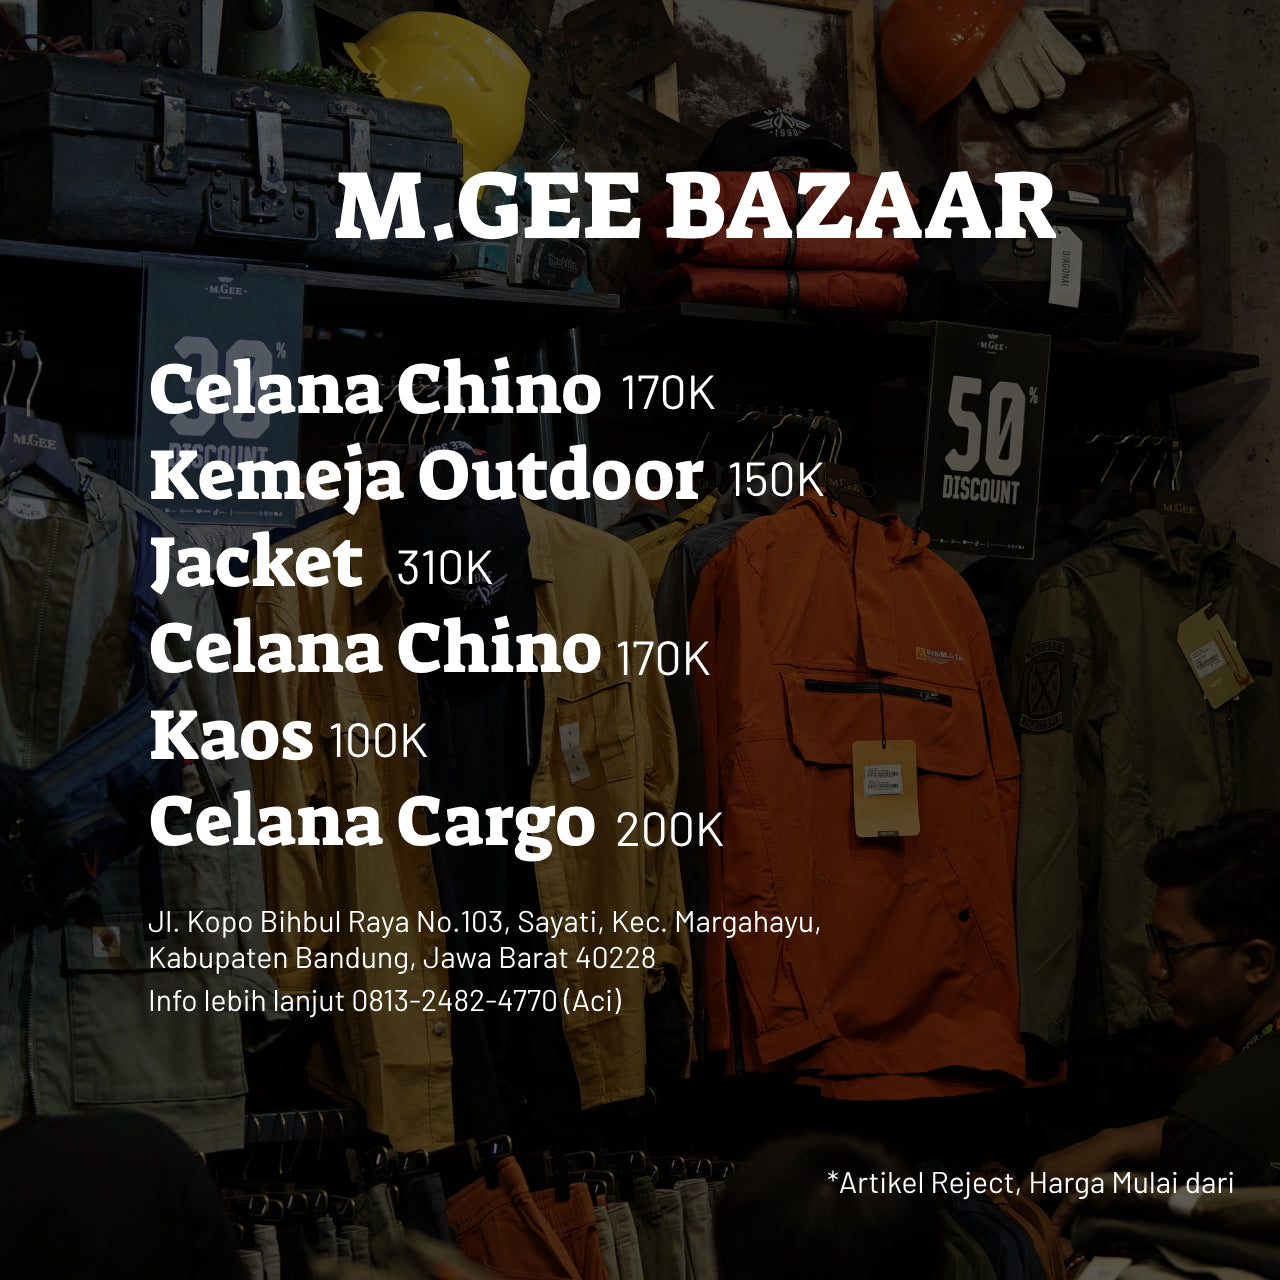 Mgee Bazar: Harga Heran Murah, Semua Barang!